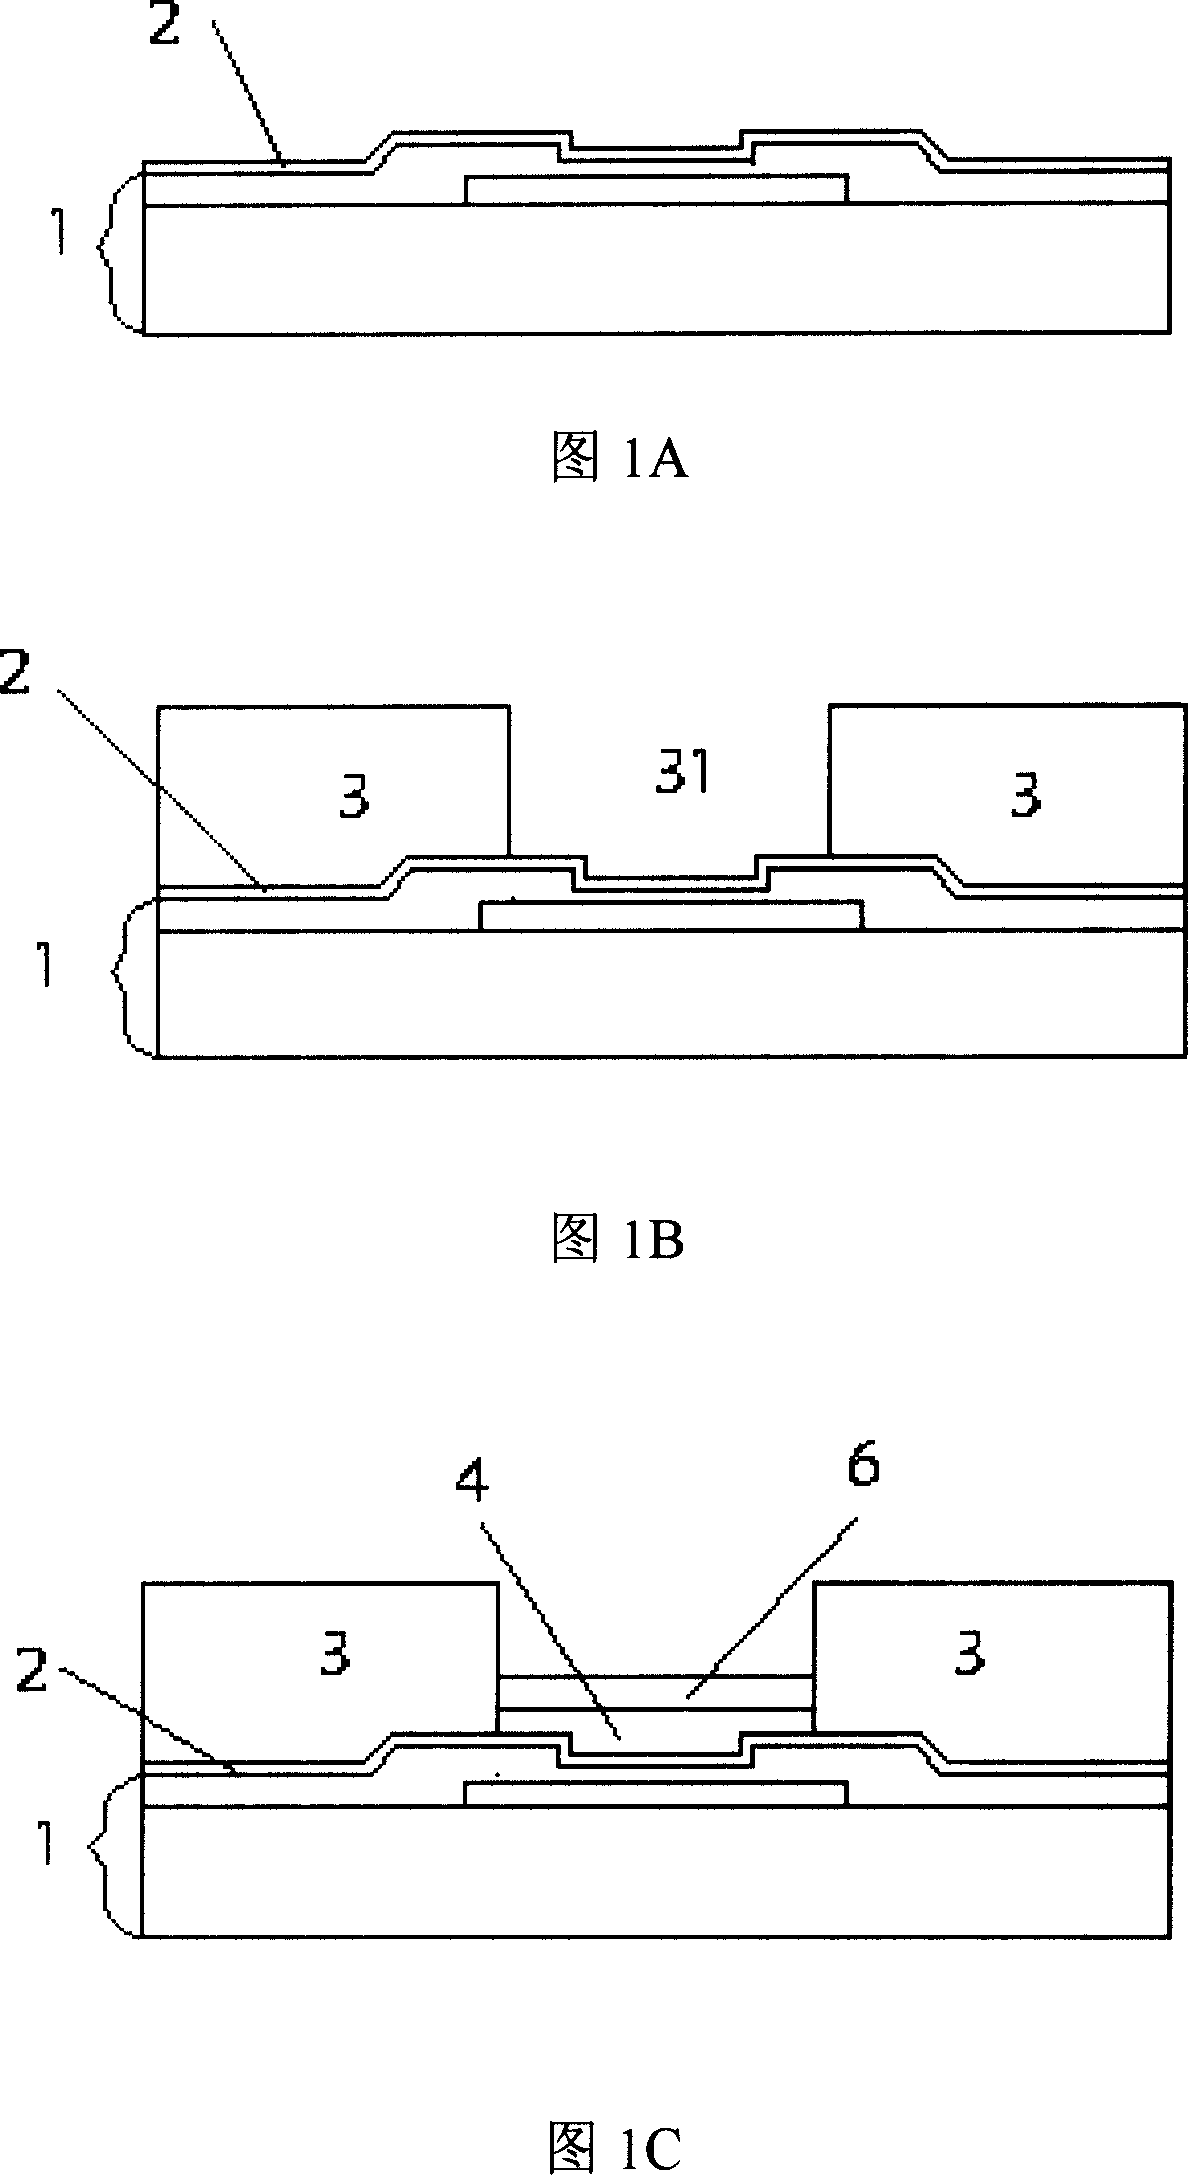 Method for making solder bump